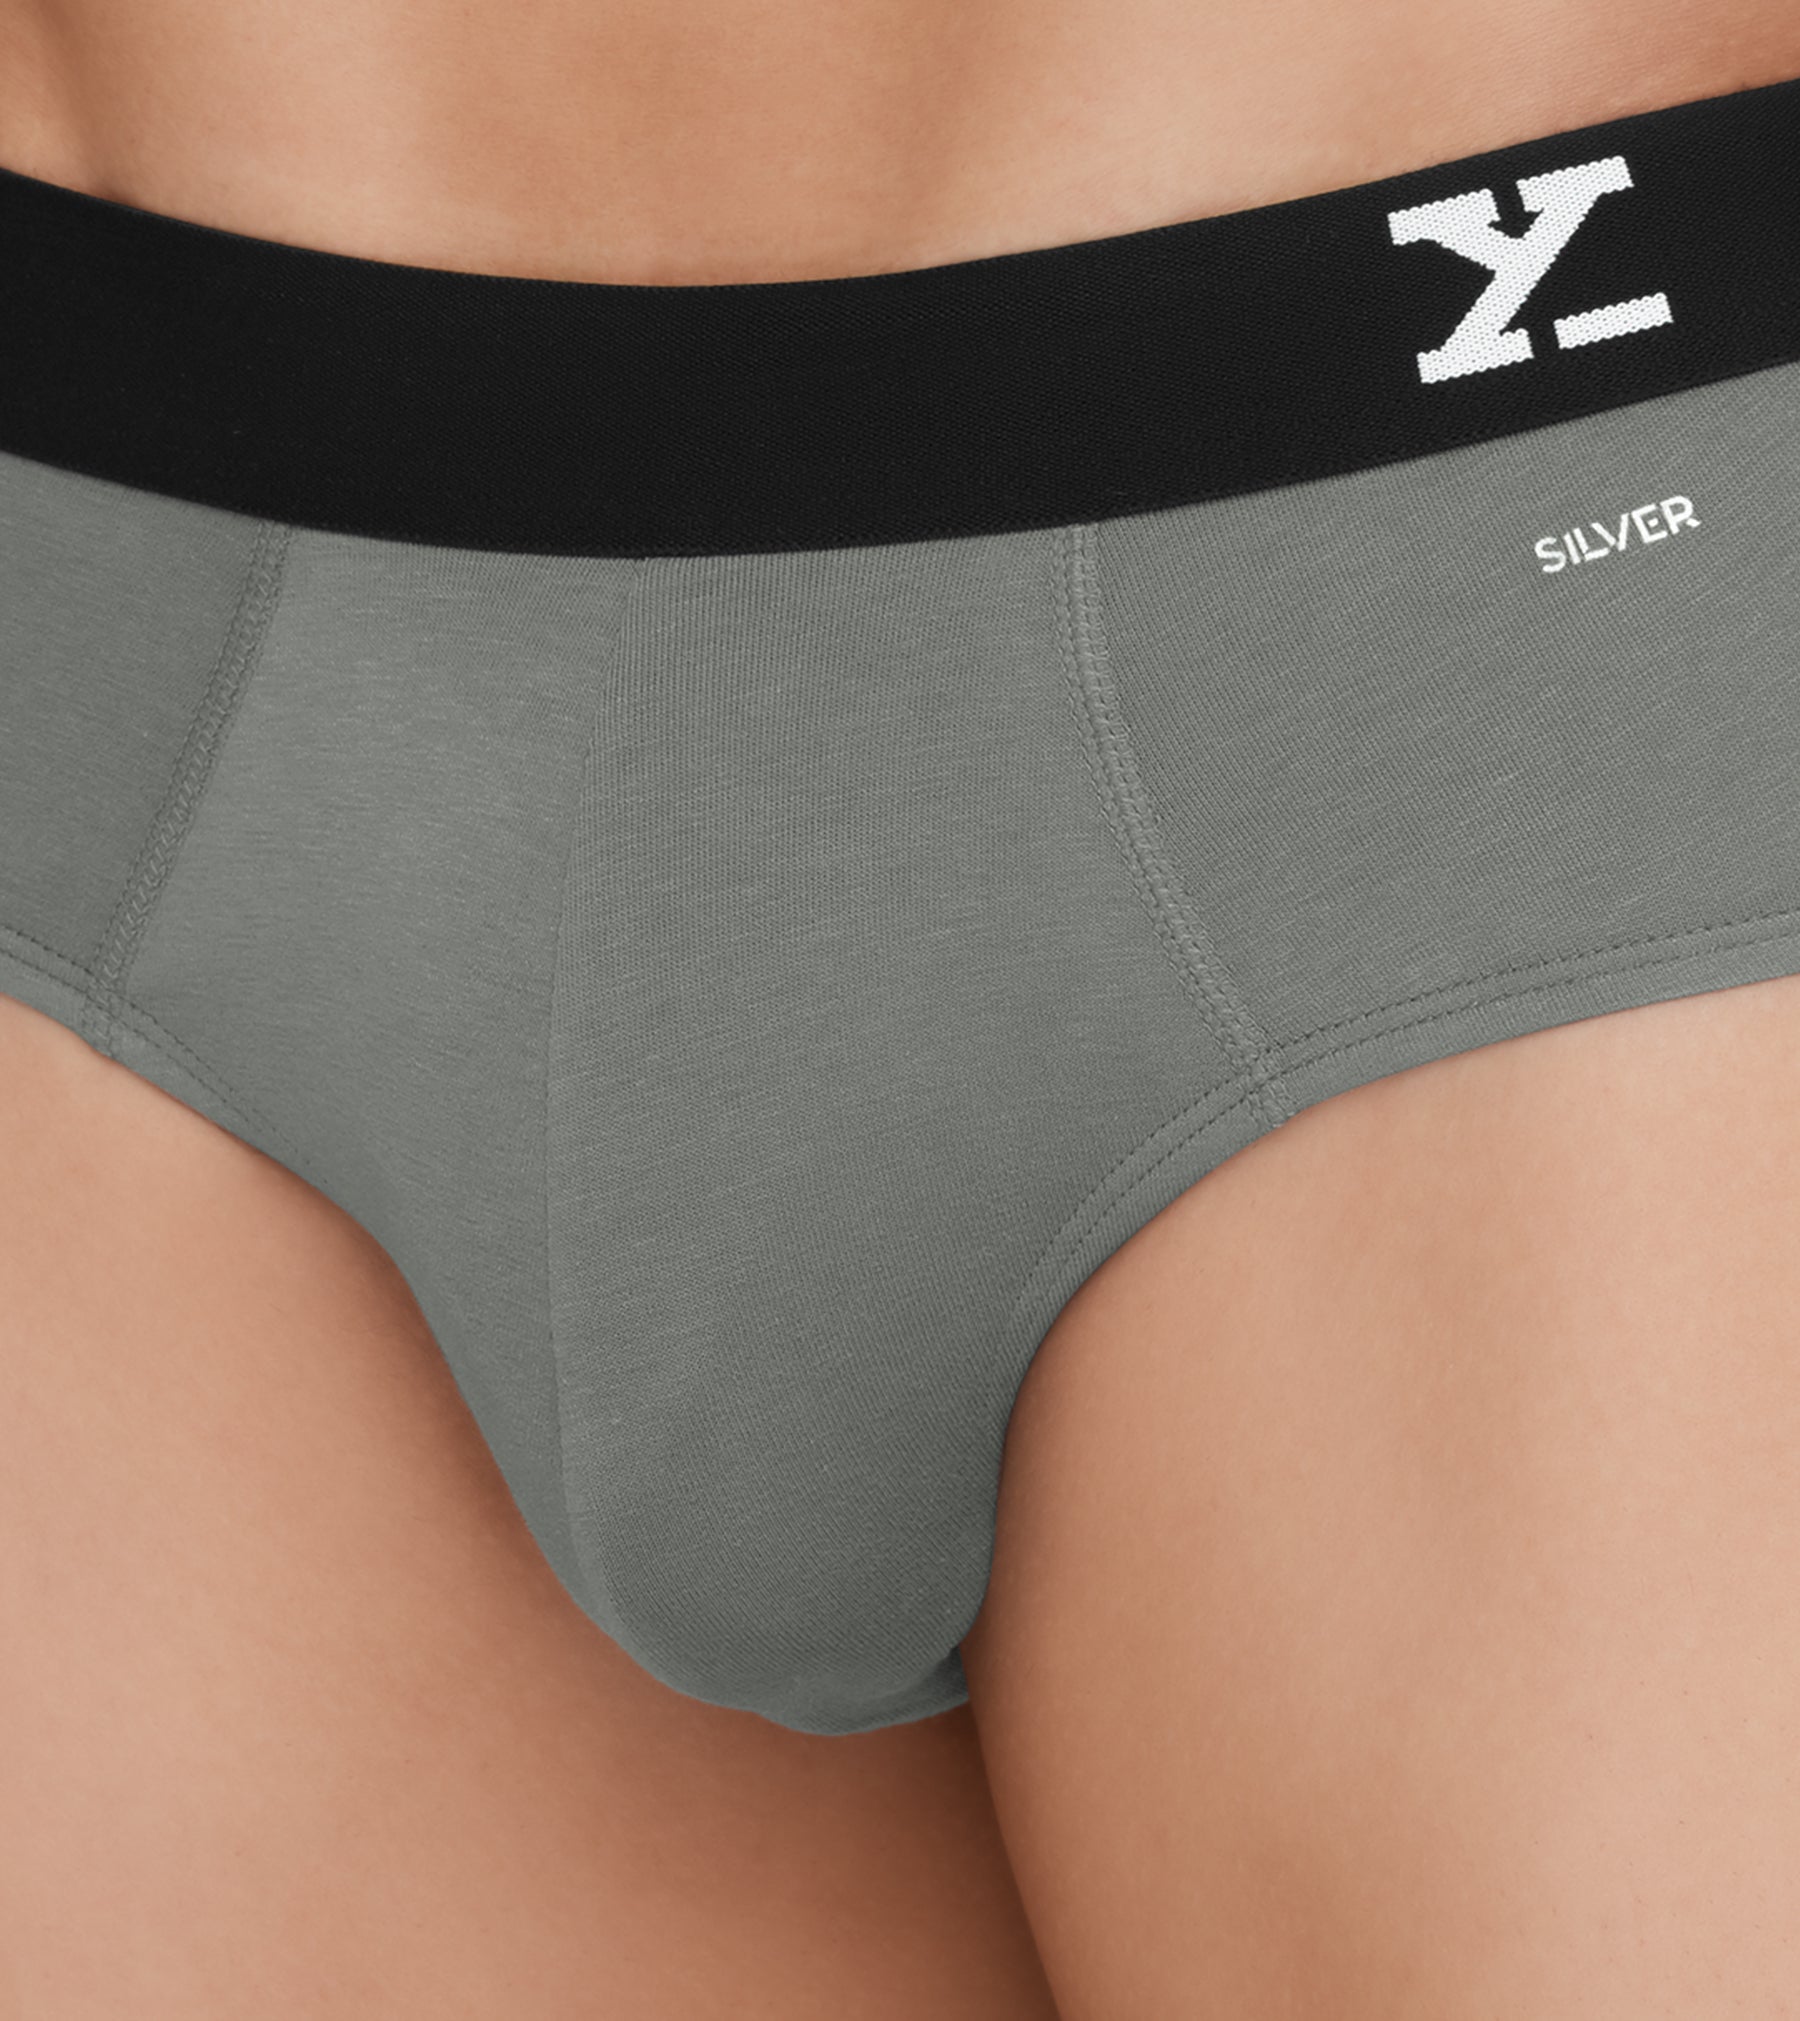 Aero Silver Cotton Briefs For Men Pack of 2(Maroon, Grey) -  XYXX Mens Apparels